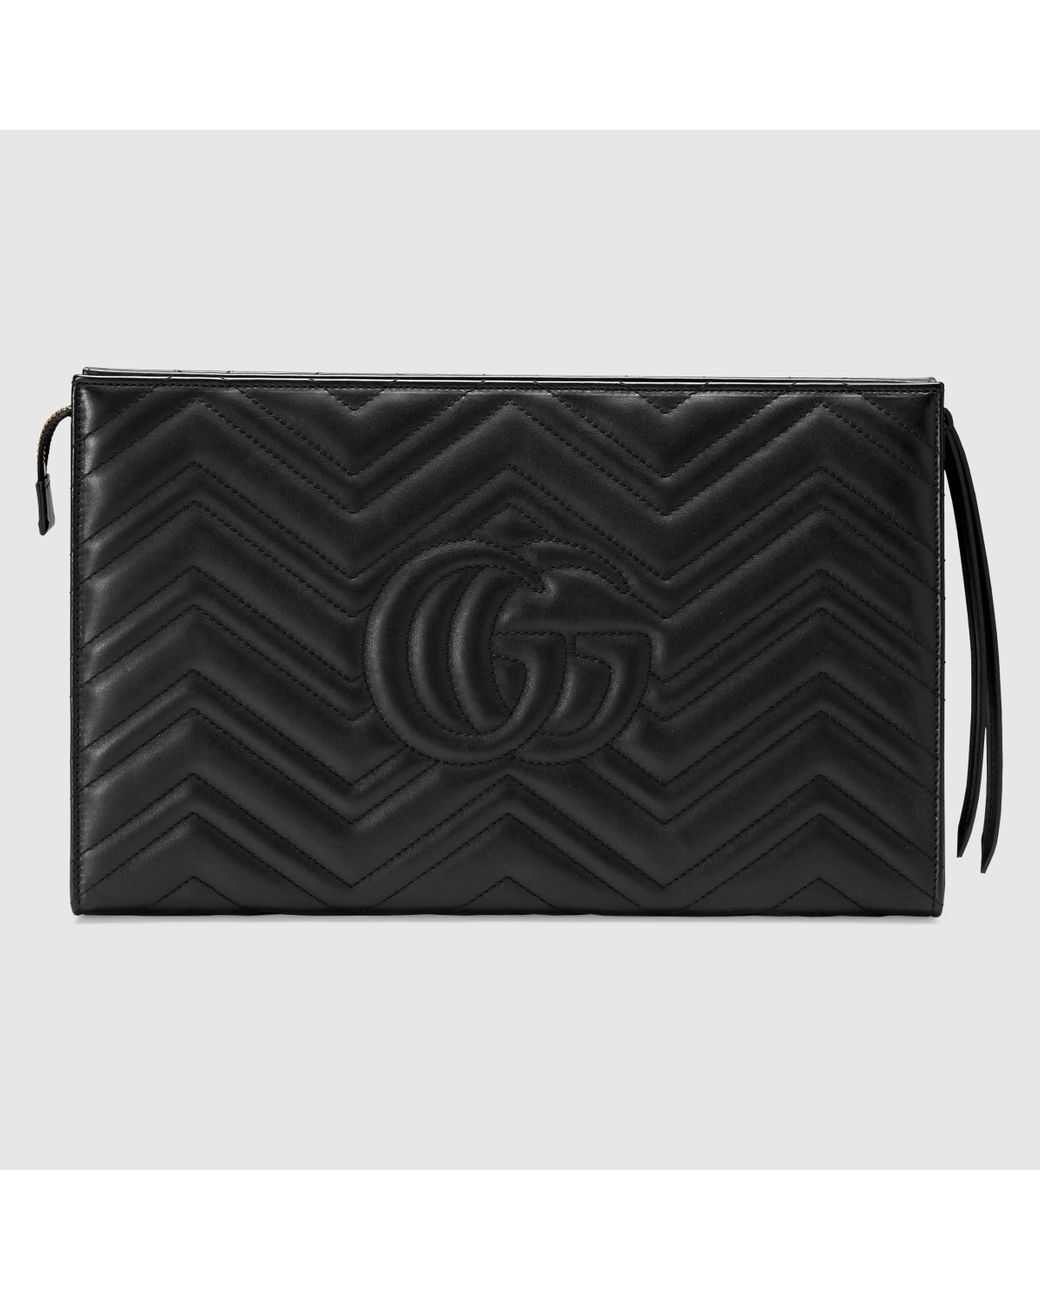 Black Leather GG Marmont Matelassé Mini Bag Zip Top Closure